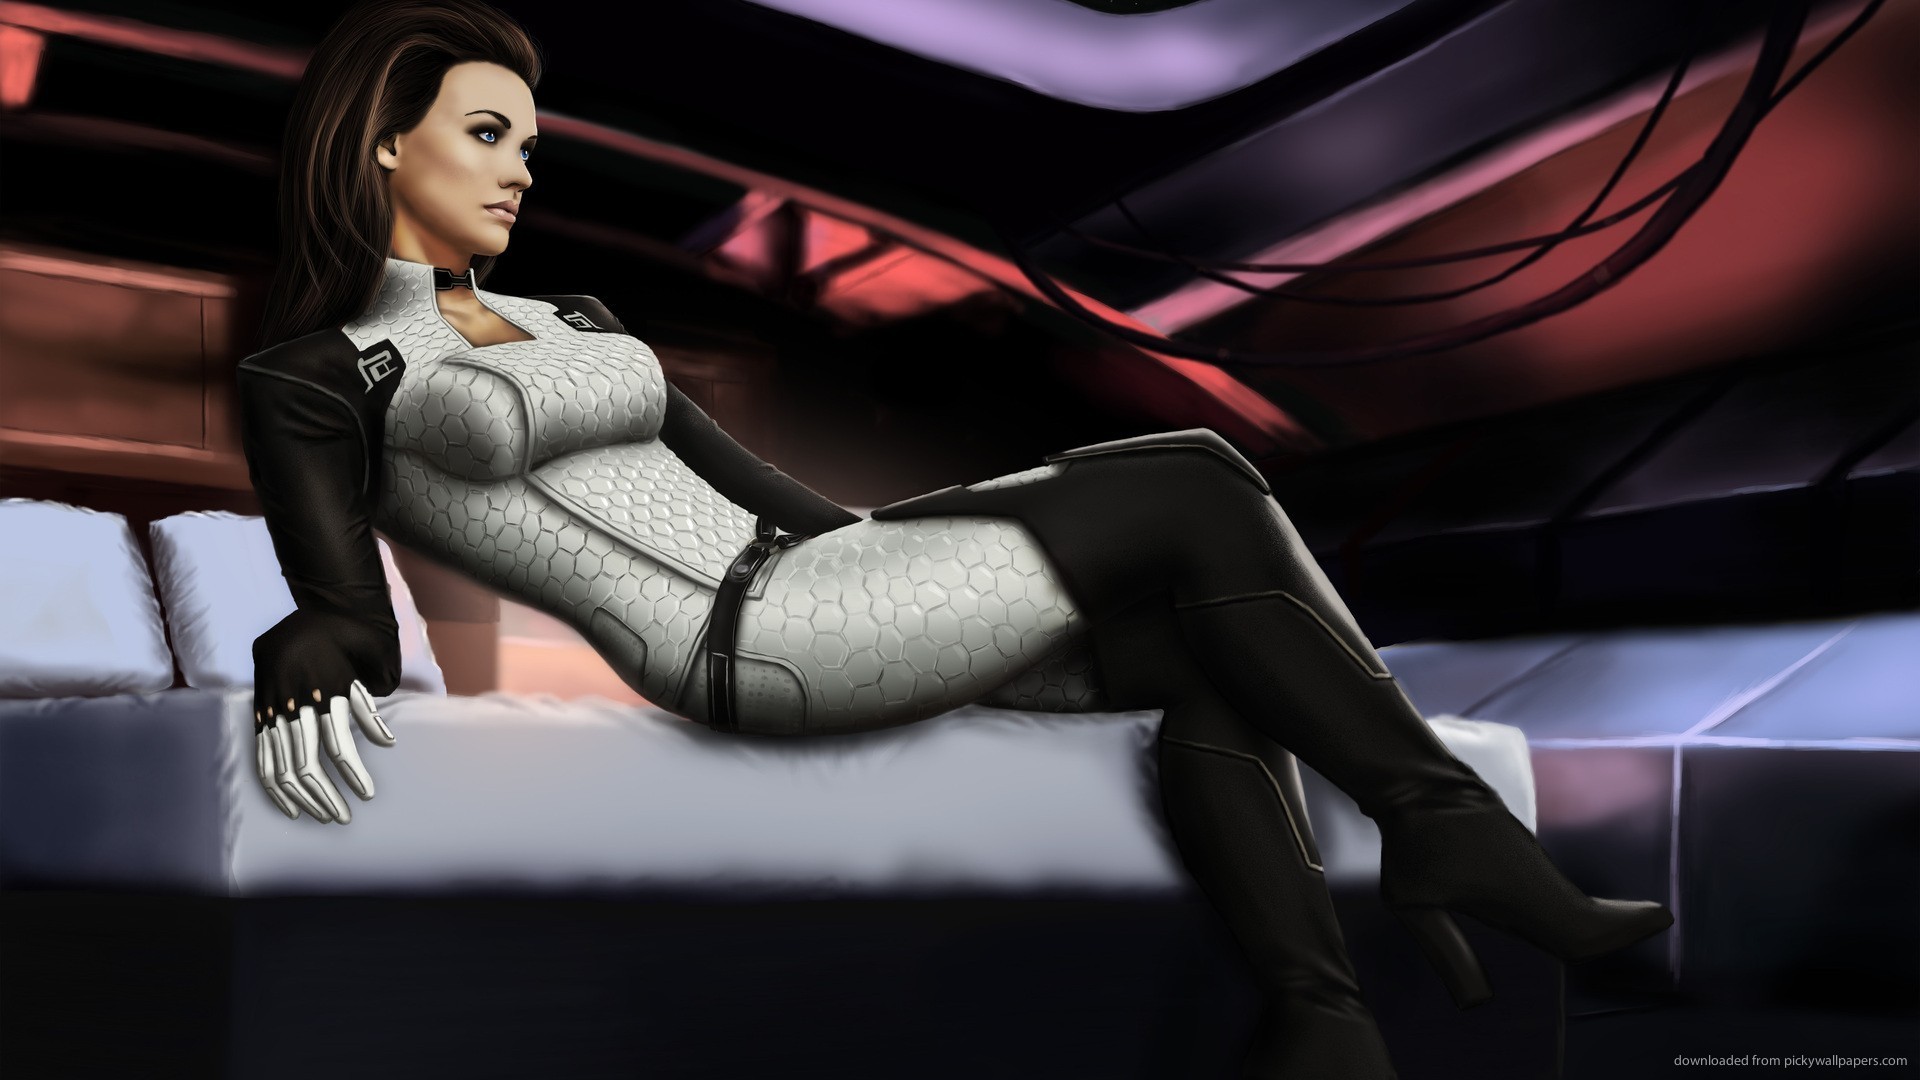 🔥 Download Hd Mass Effect Sexy Miranda Lawson Wallpaper By Daler78 Hd Mass Effect Wallpapers